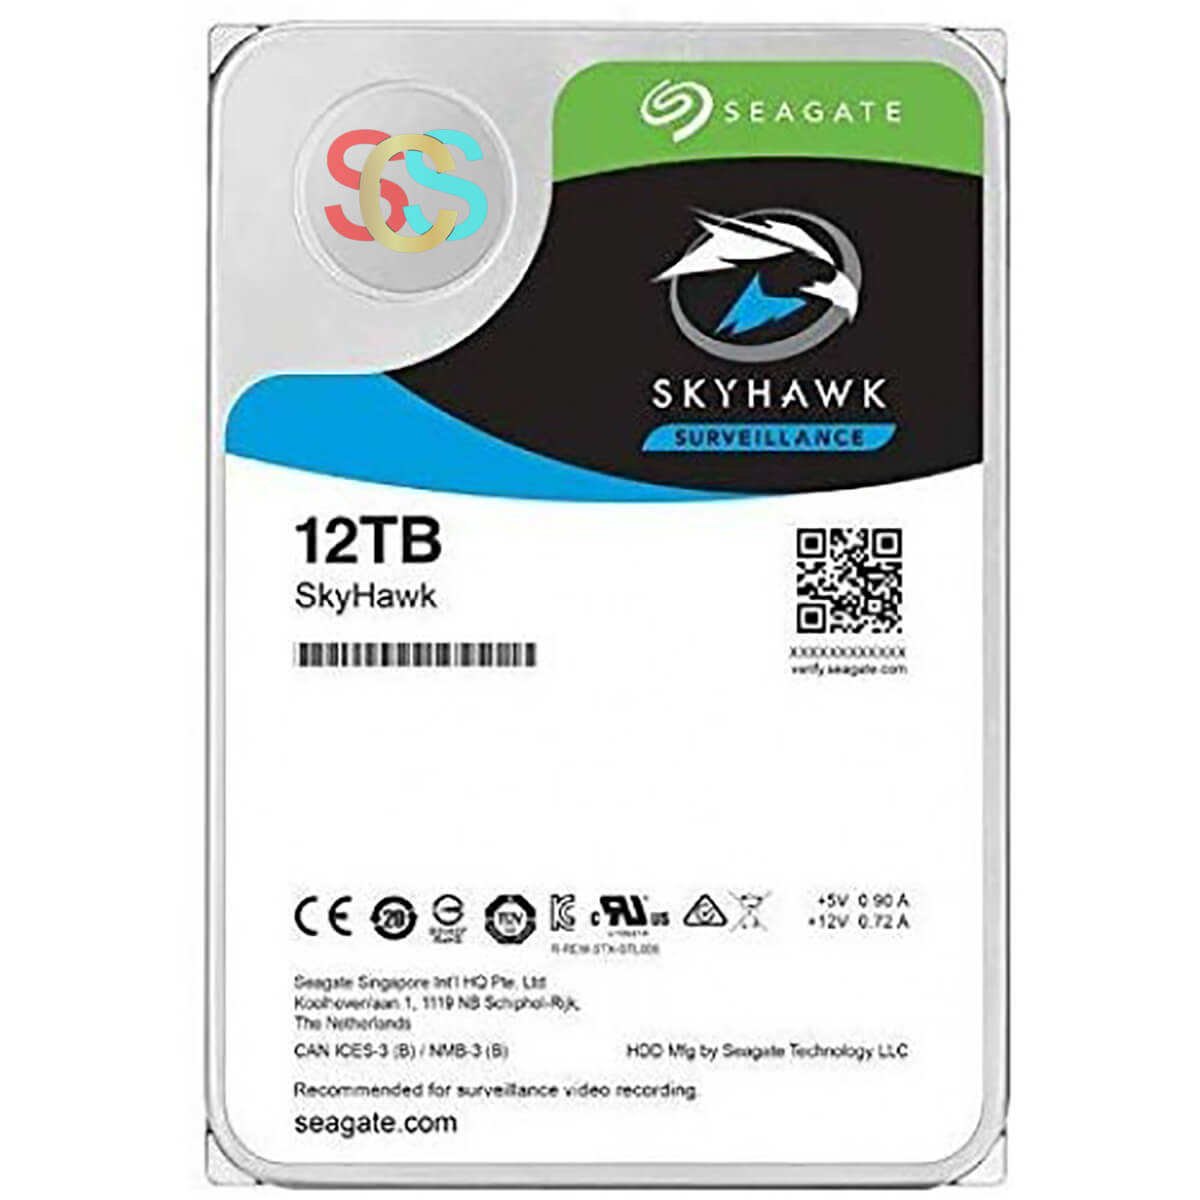 Seagate-SkyHawk-12TB-3.5-Inch-SATA-Surveillance-HDD